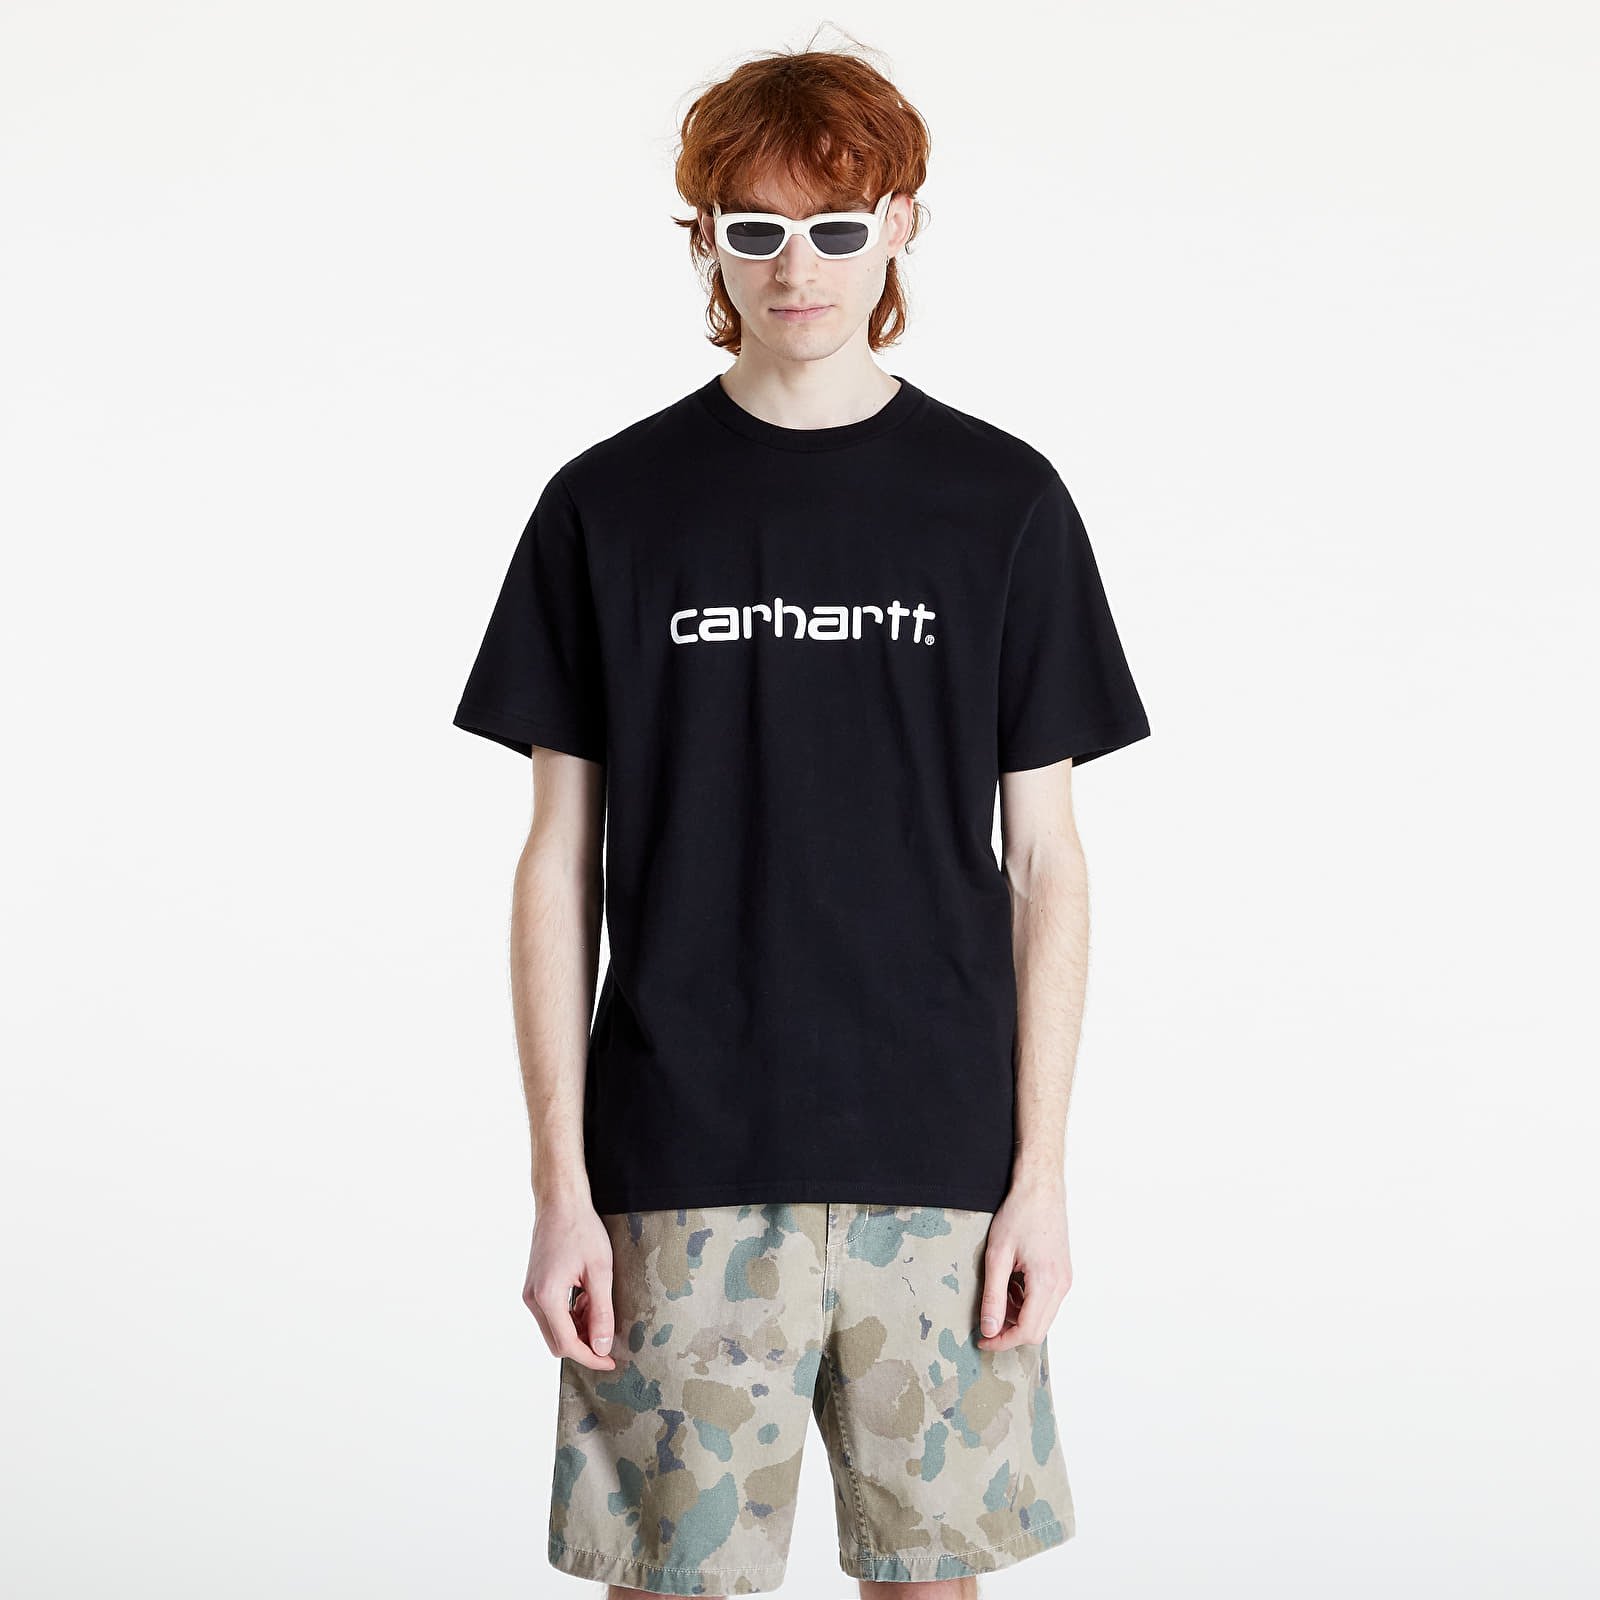 Carhartt WIP S/S Script T-Shirt Black/ White